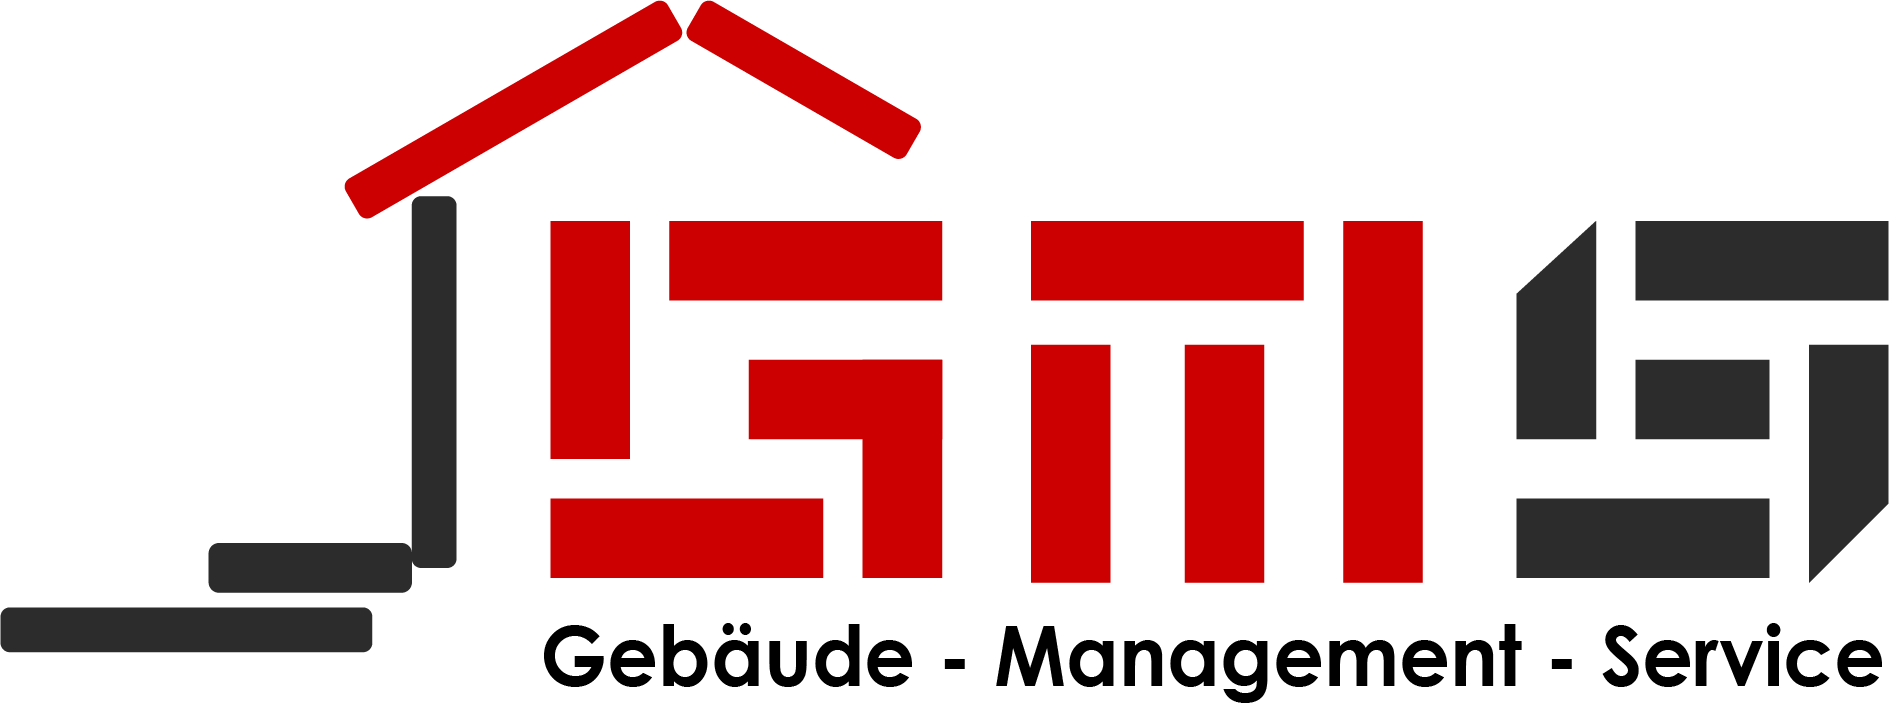 old_logo